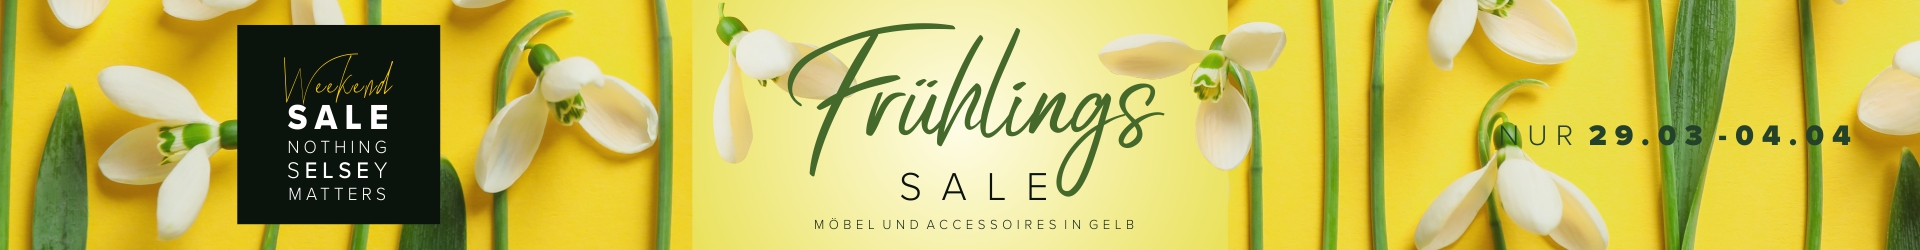 Frühlings Sale - 
Möbel und Accessoires in Gelb. Nur 29.03.-04.04